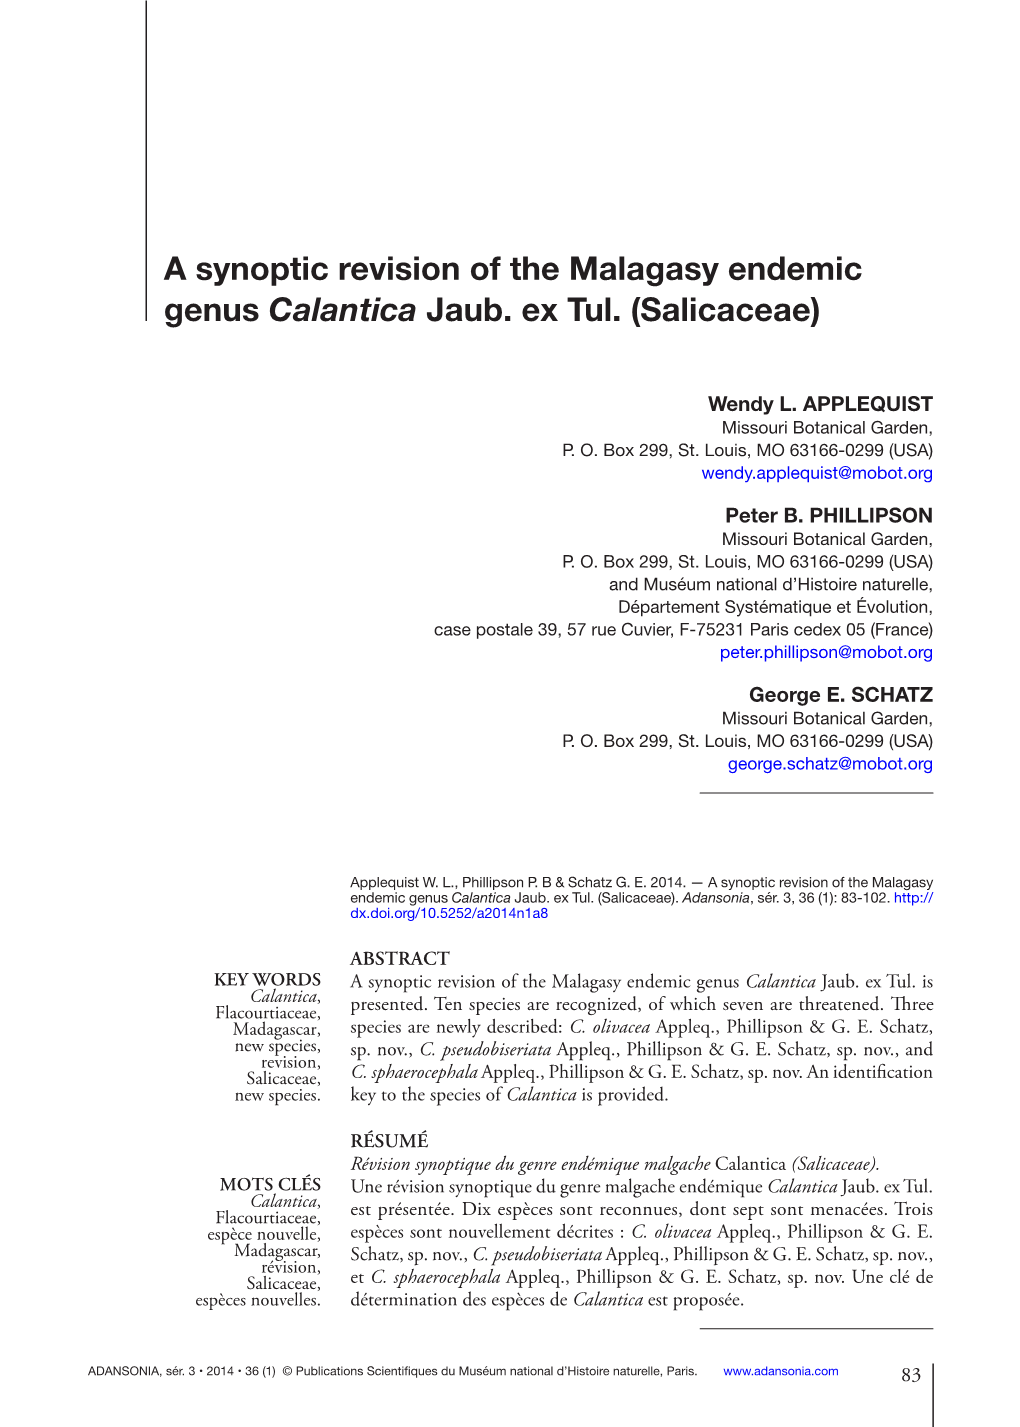 A Synoptic Revision of the Malagasy Endemic Genus Calantica Jaub. Ex Tul